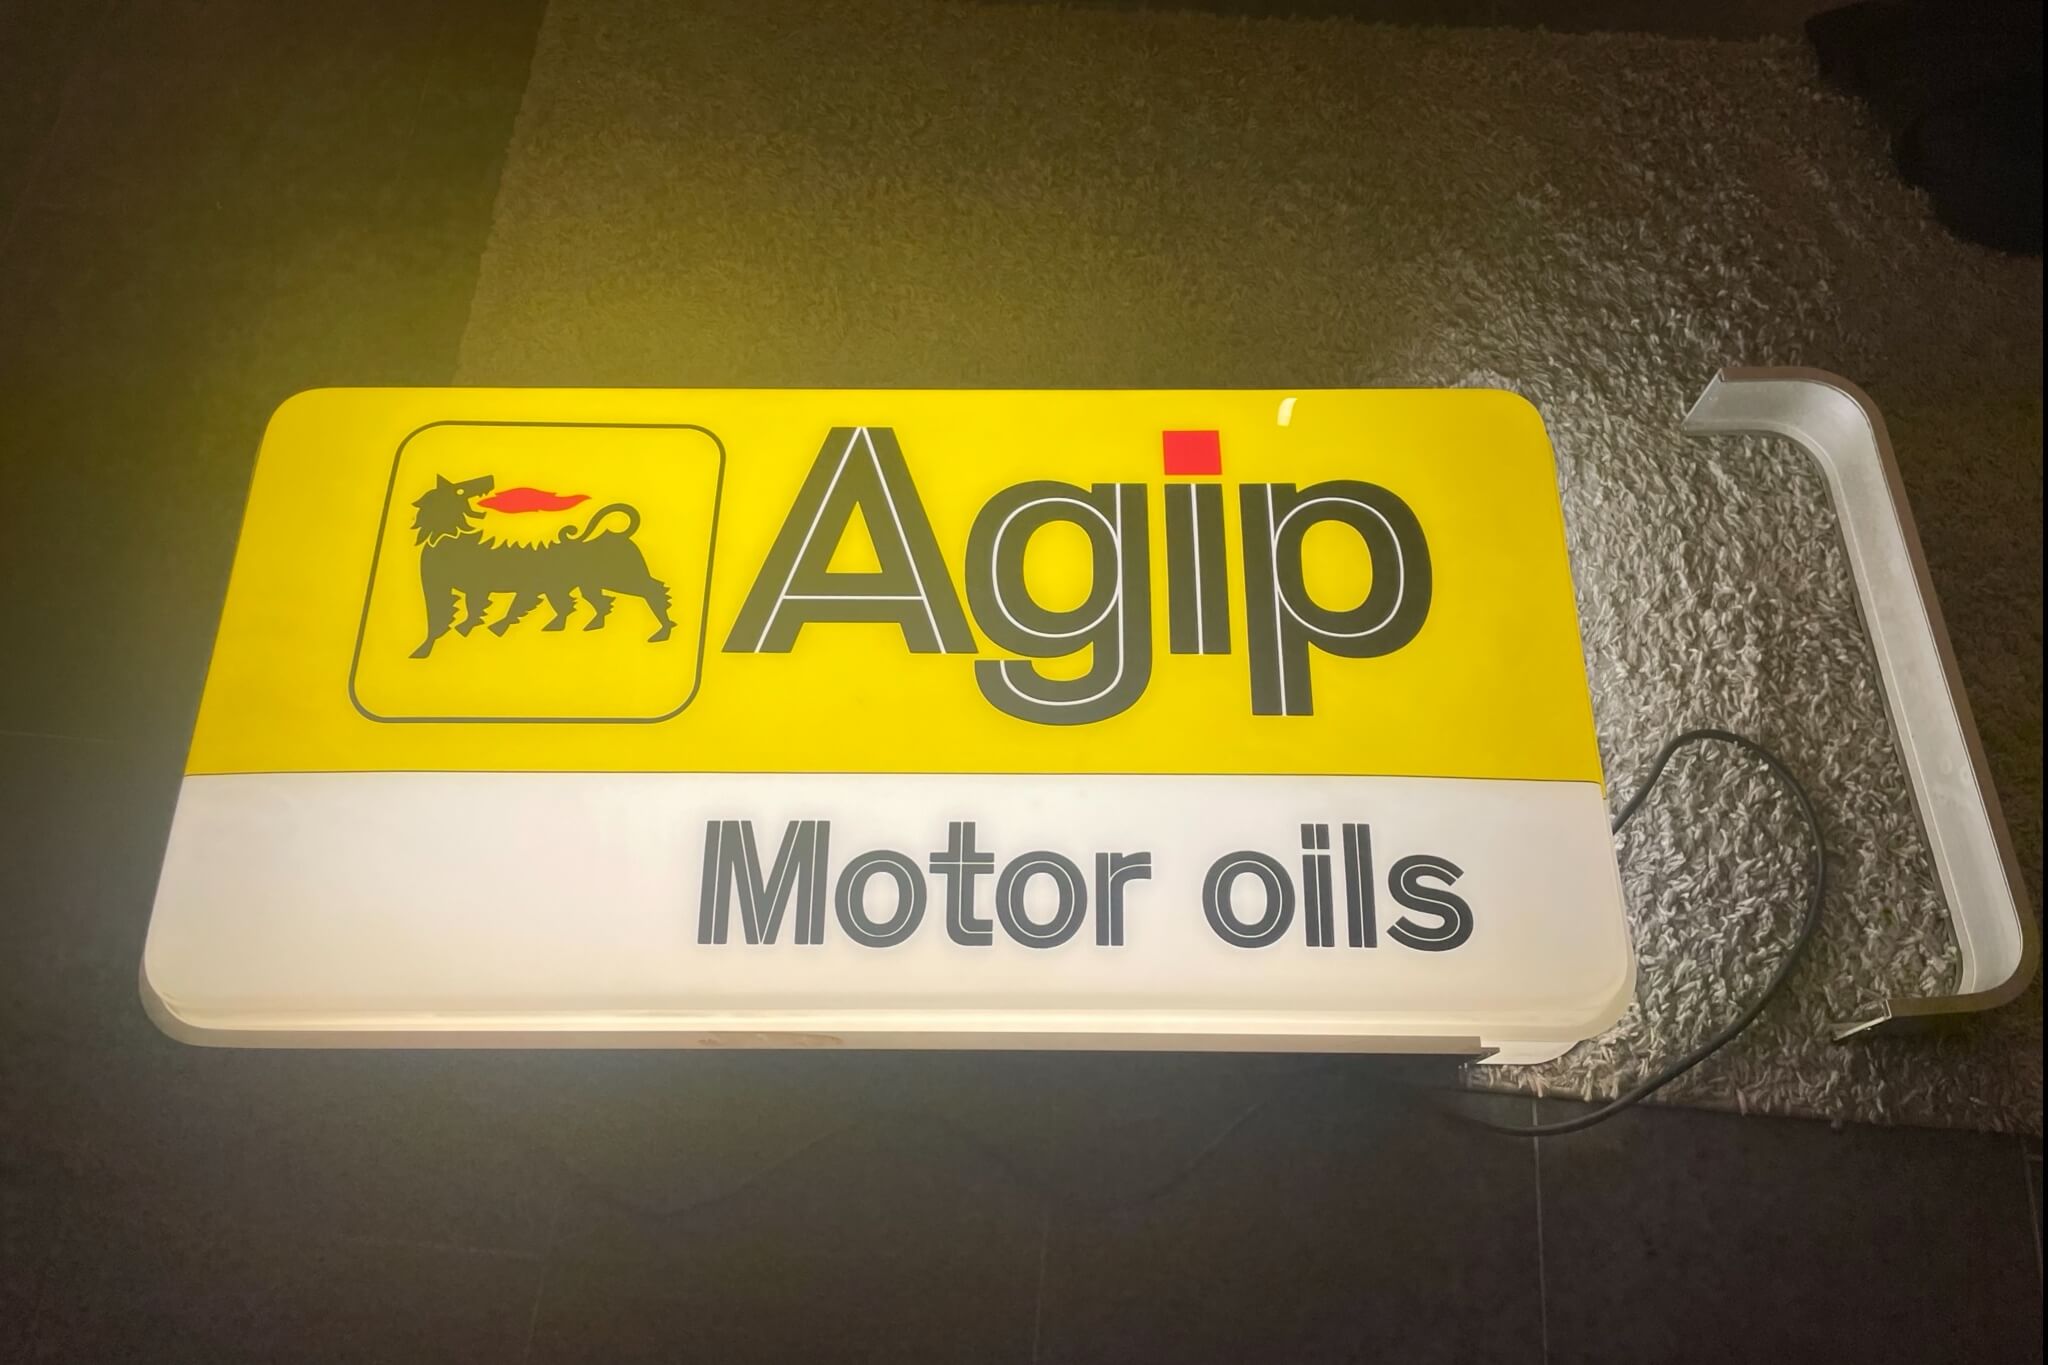 DT: New Old Stock Illuminated Agip Sign